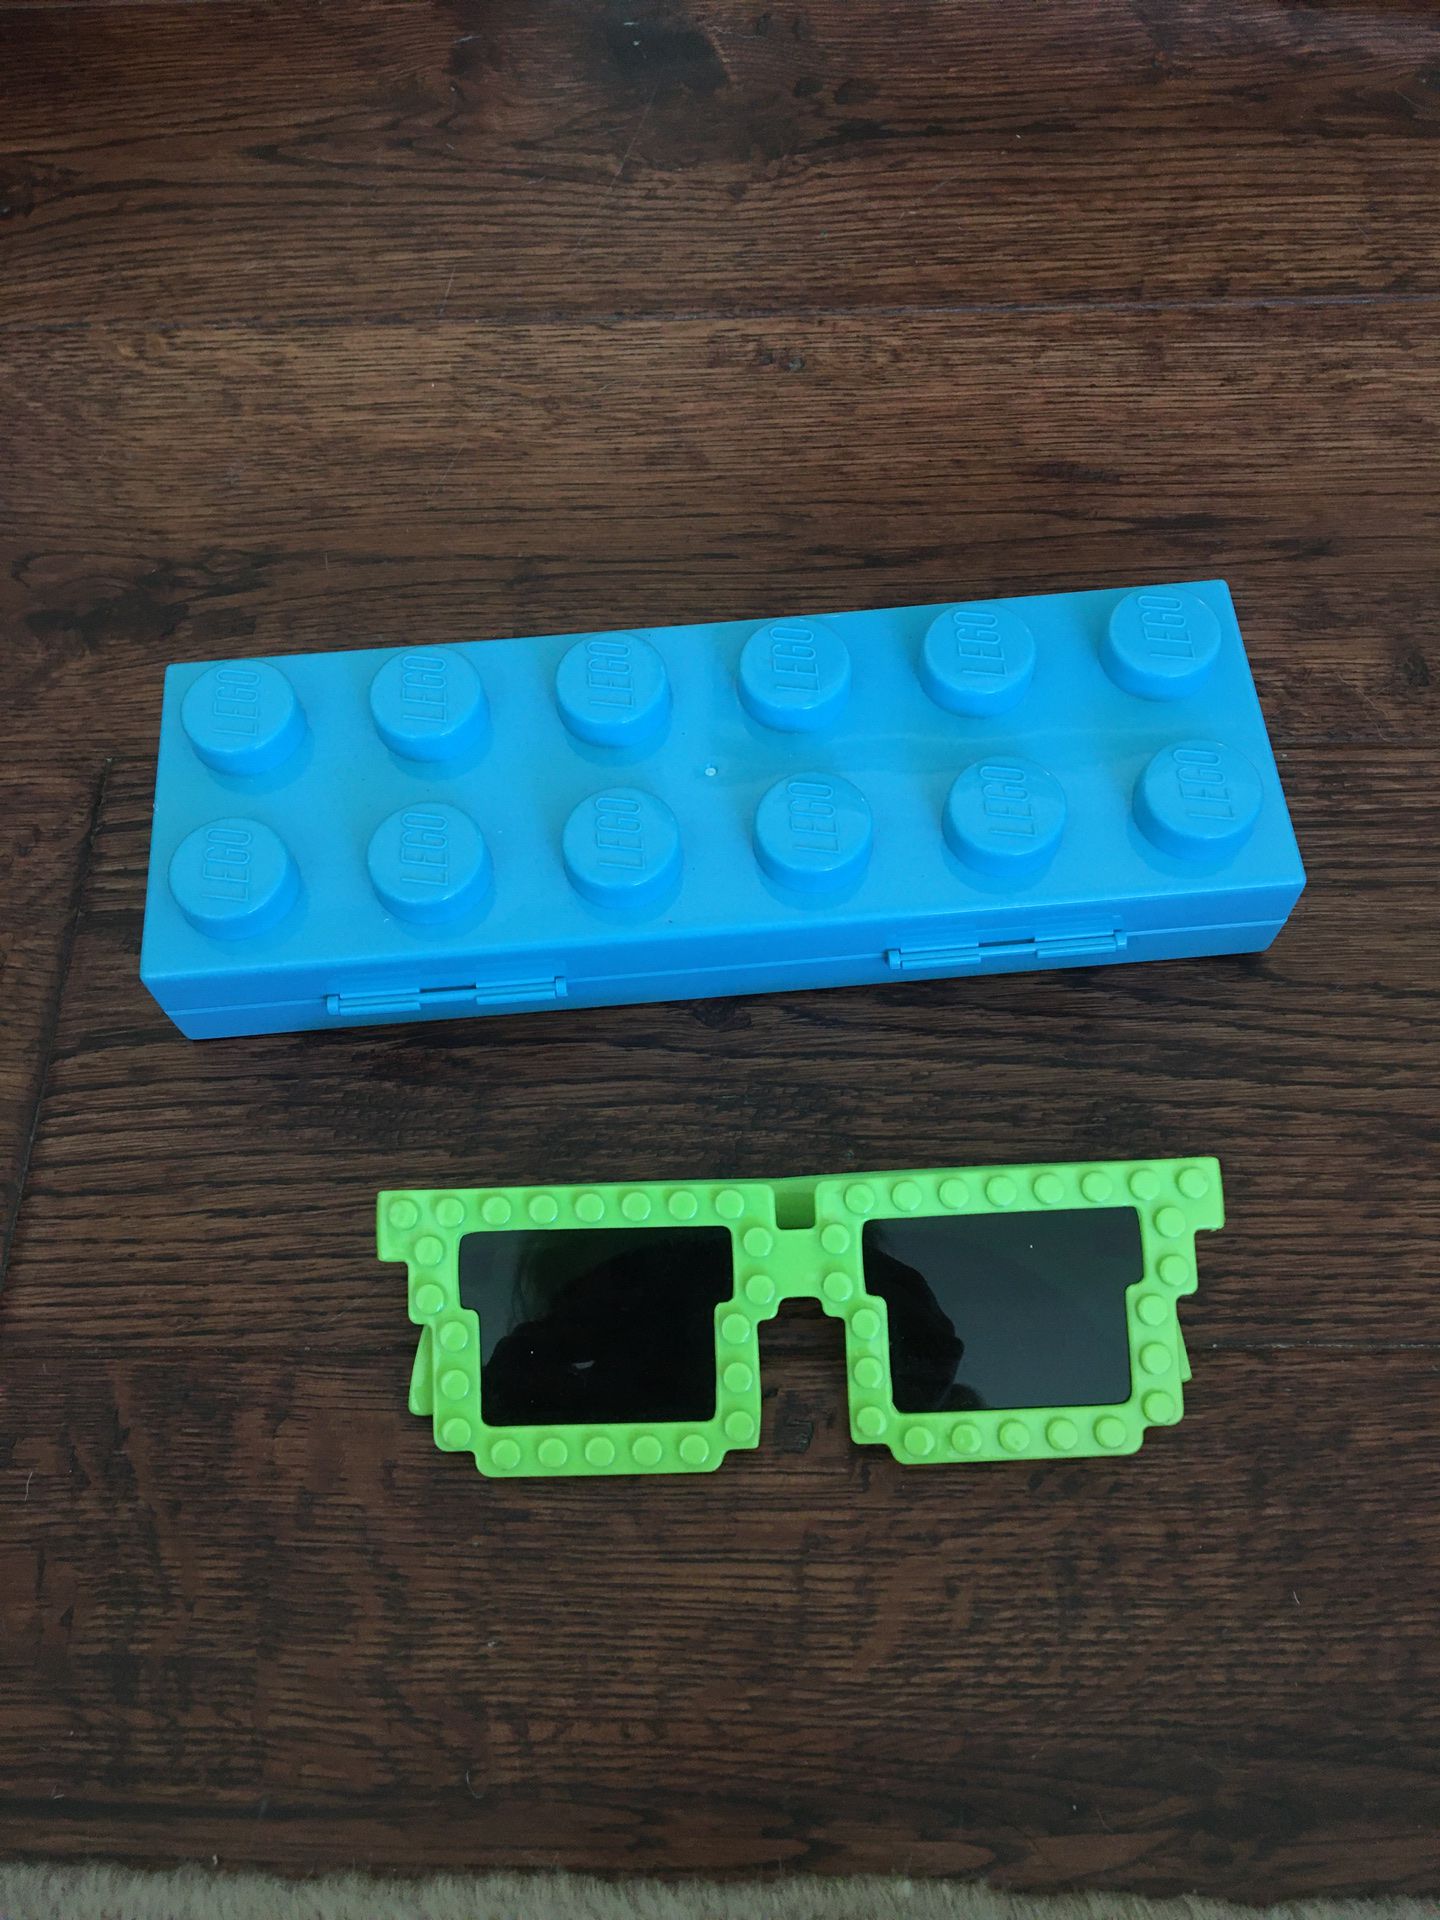 Lego pencil case and lego glasses